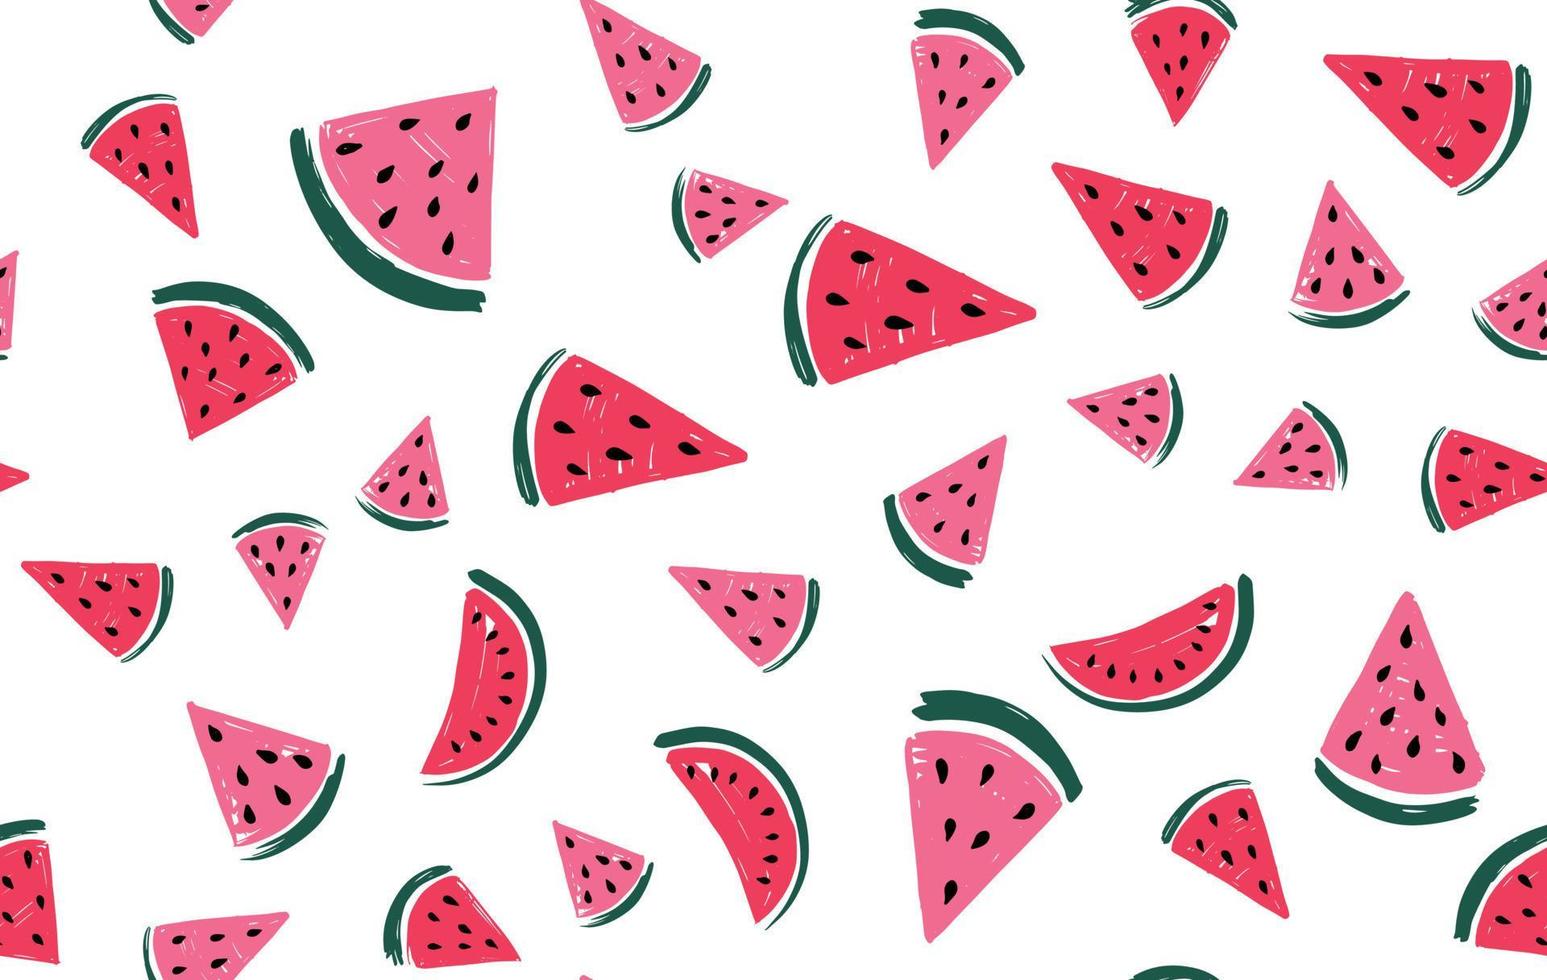 Watermelon slice hand drawn illustration. vector